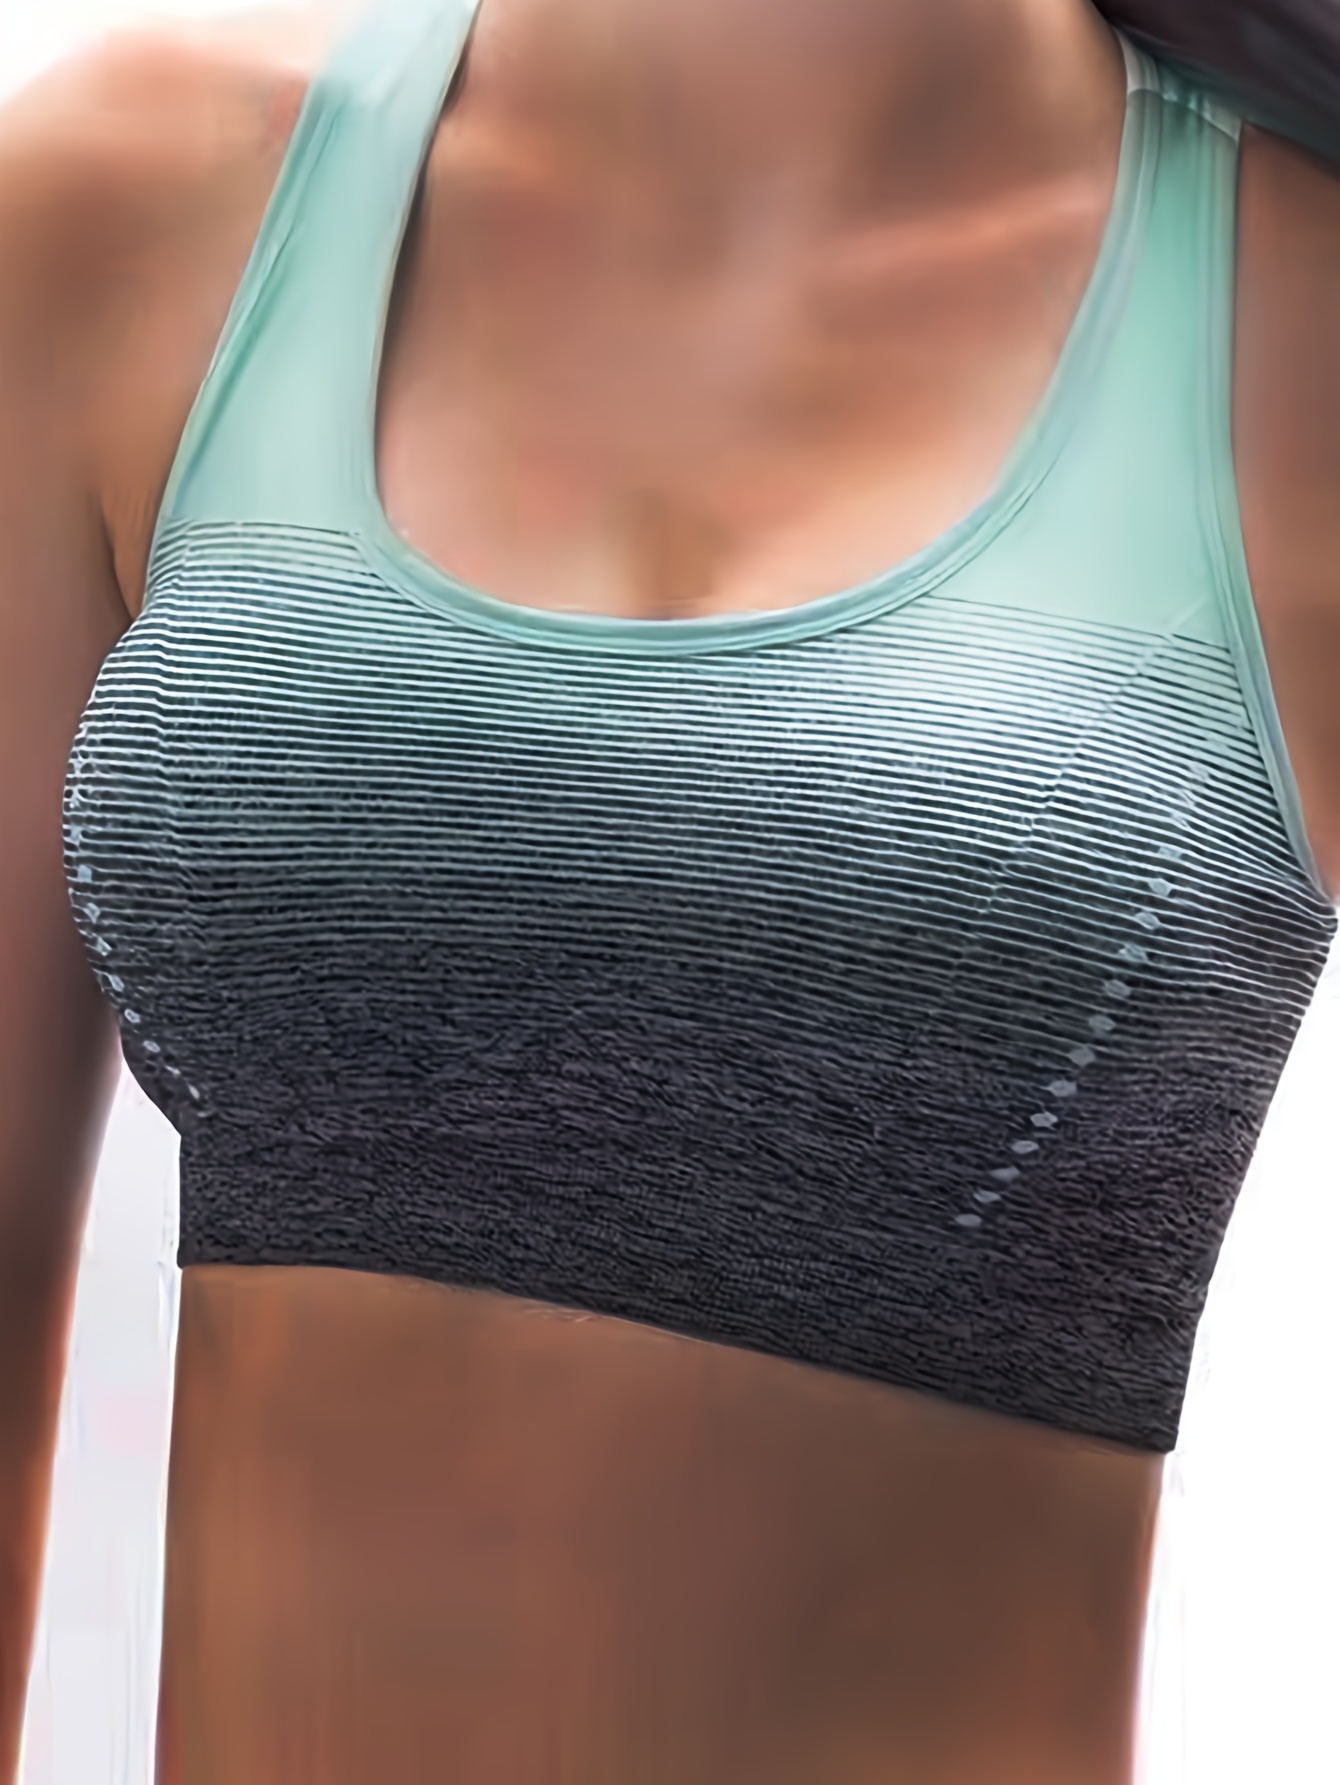 male sports bra - Buy male sports bra with free shipping on AliExpress